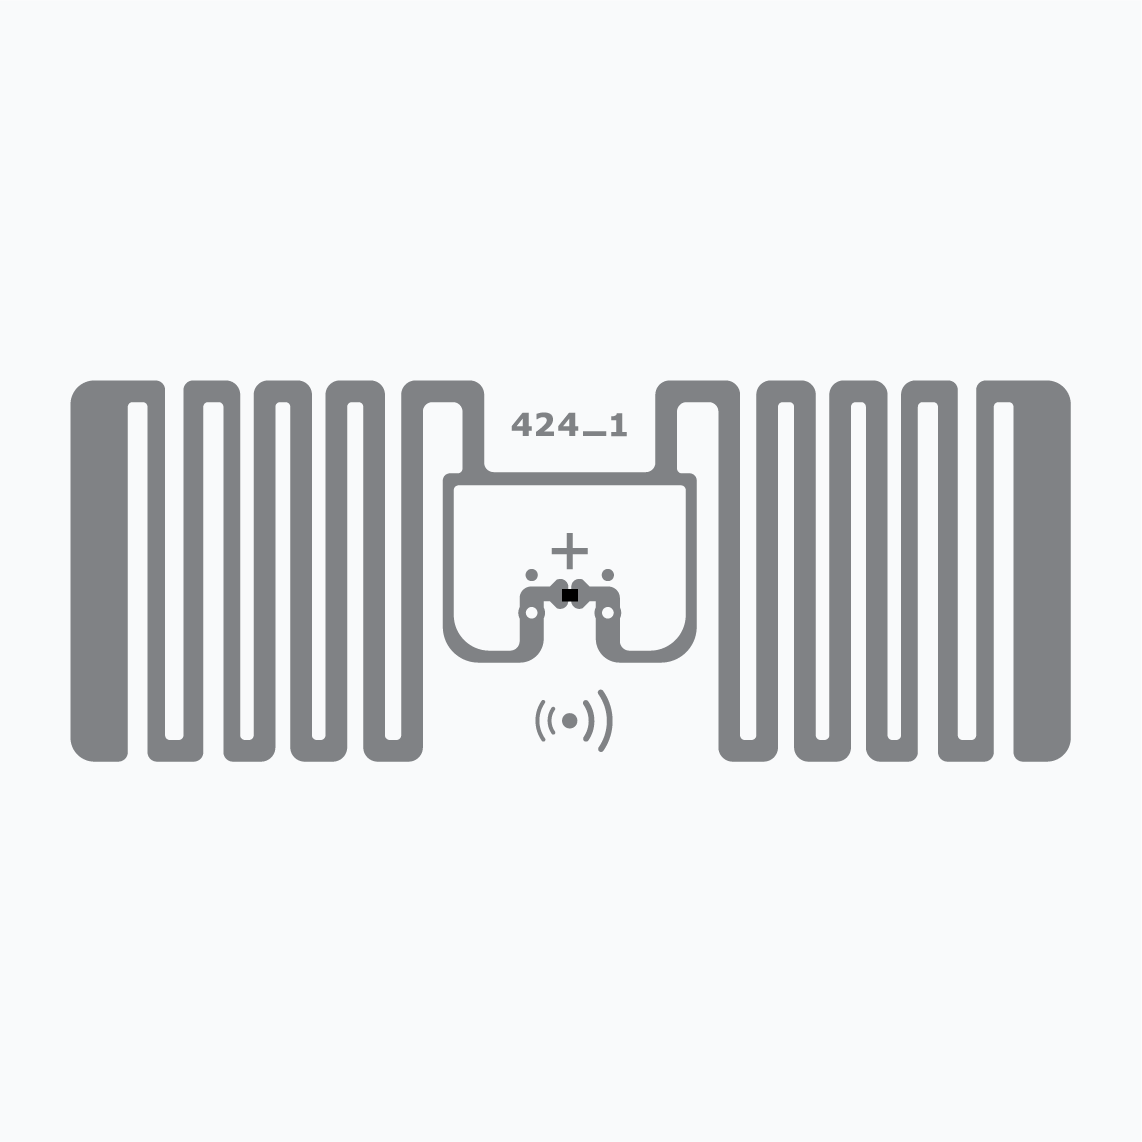 UHF RFID Inlay: Miniweb, Monza R6 R6-P ETSI